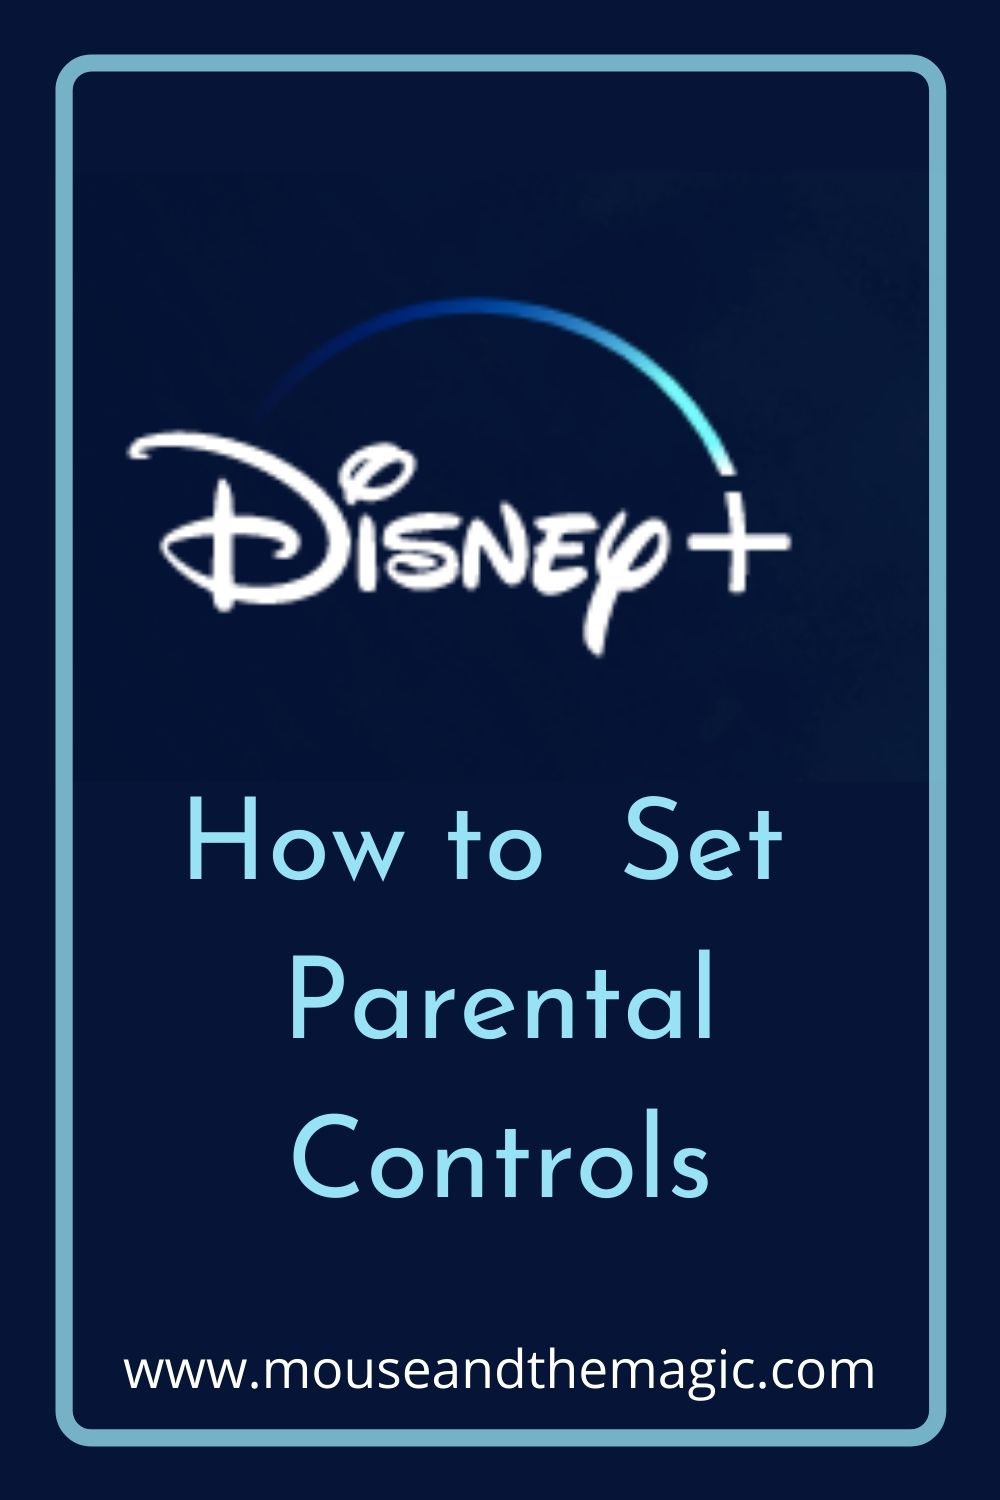 How to Set Parental Controls on Disney +